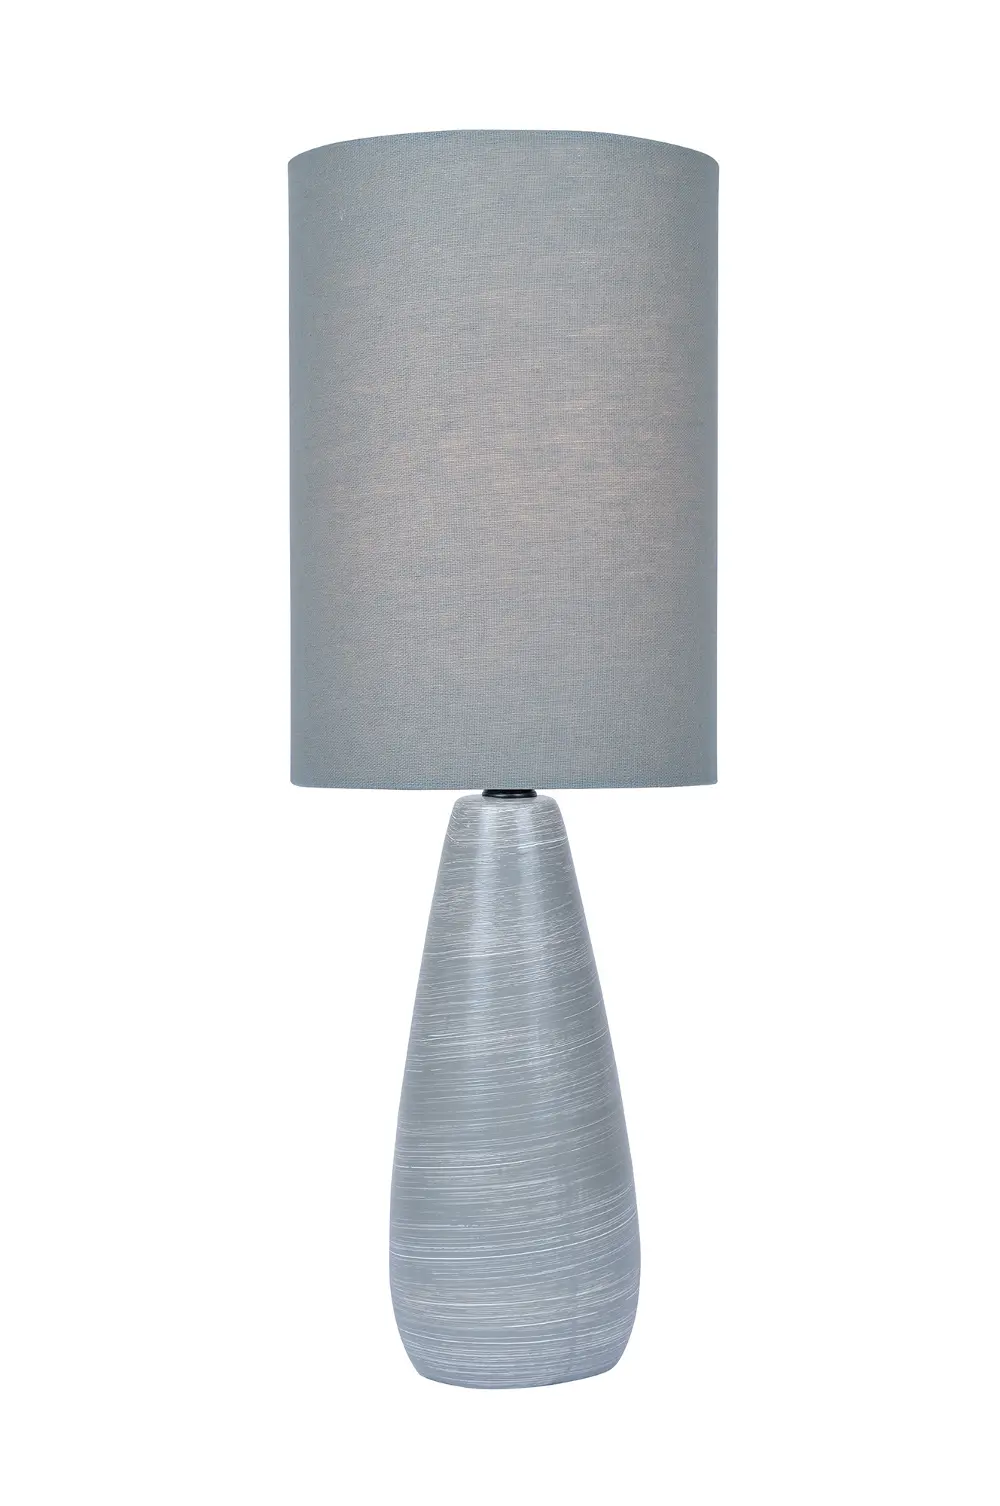 Gray Modern Table Lamp with Gray Shade - Quatro-1